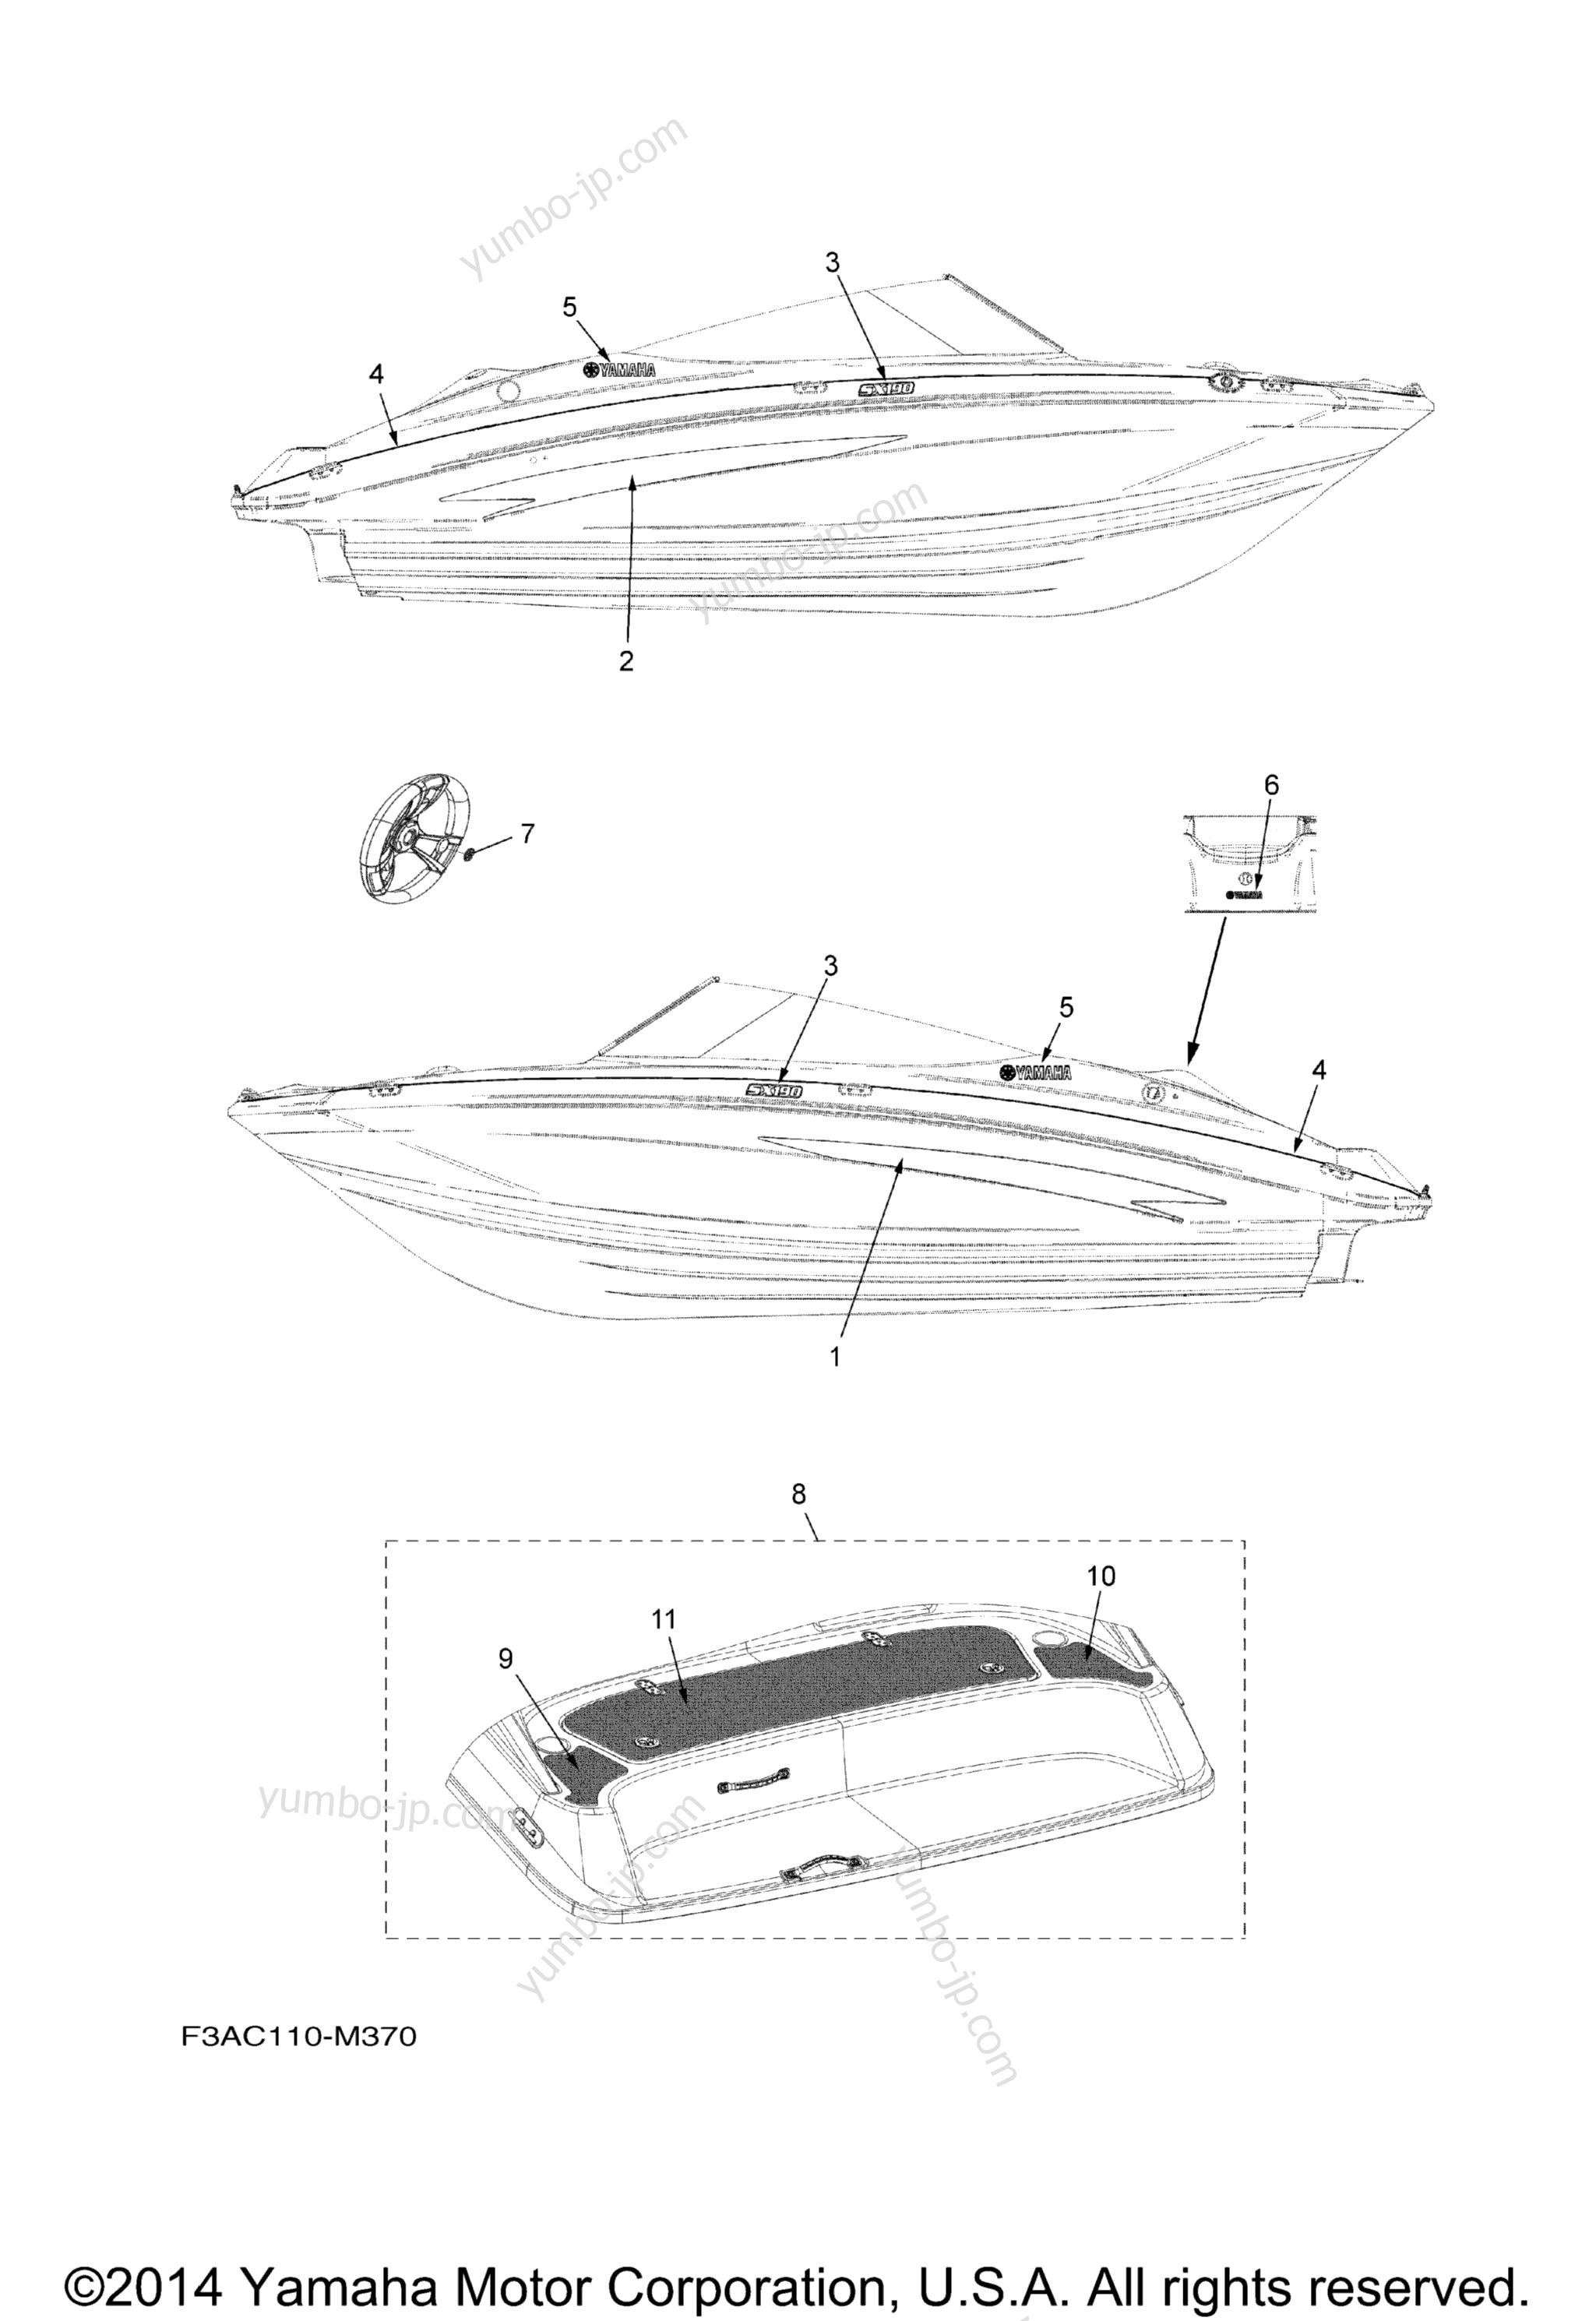 Graphics & Mats for boats YAMAHA SX190 (RX1800DMC) 2013 year